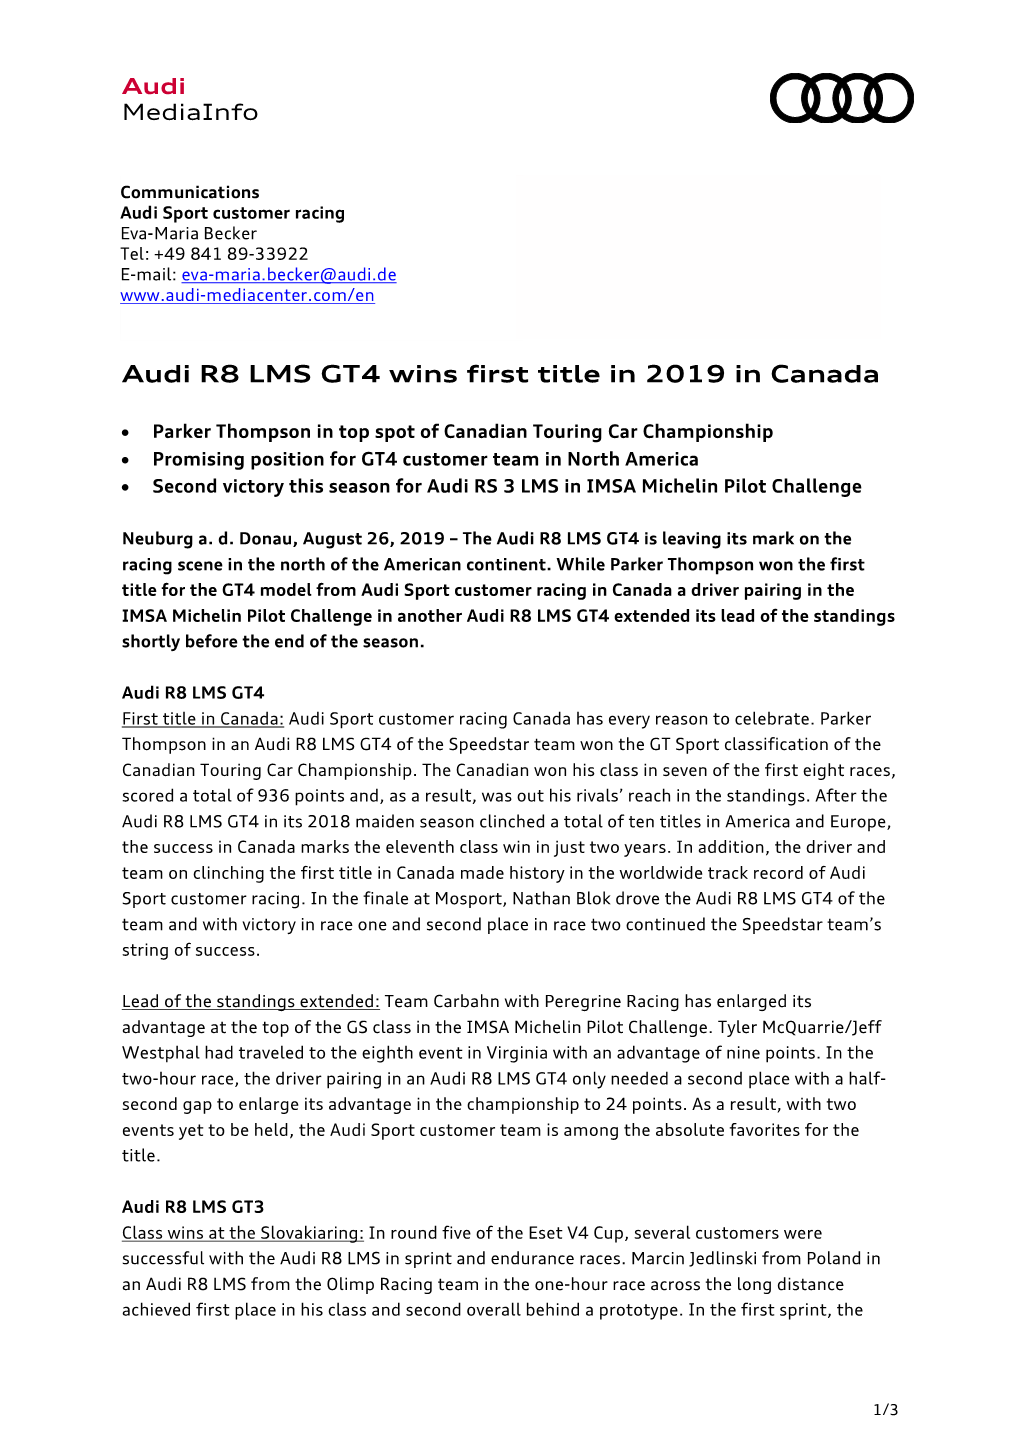 Audi R8 LMS GT4 Wins First Title in 2019 in Canada